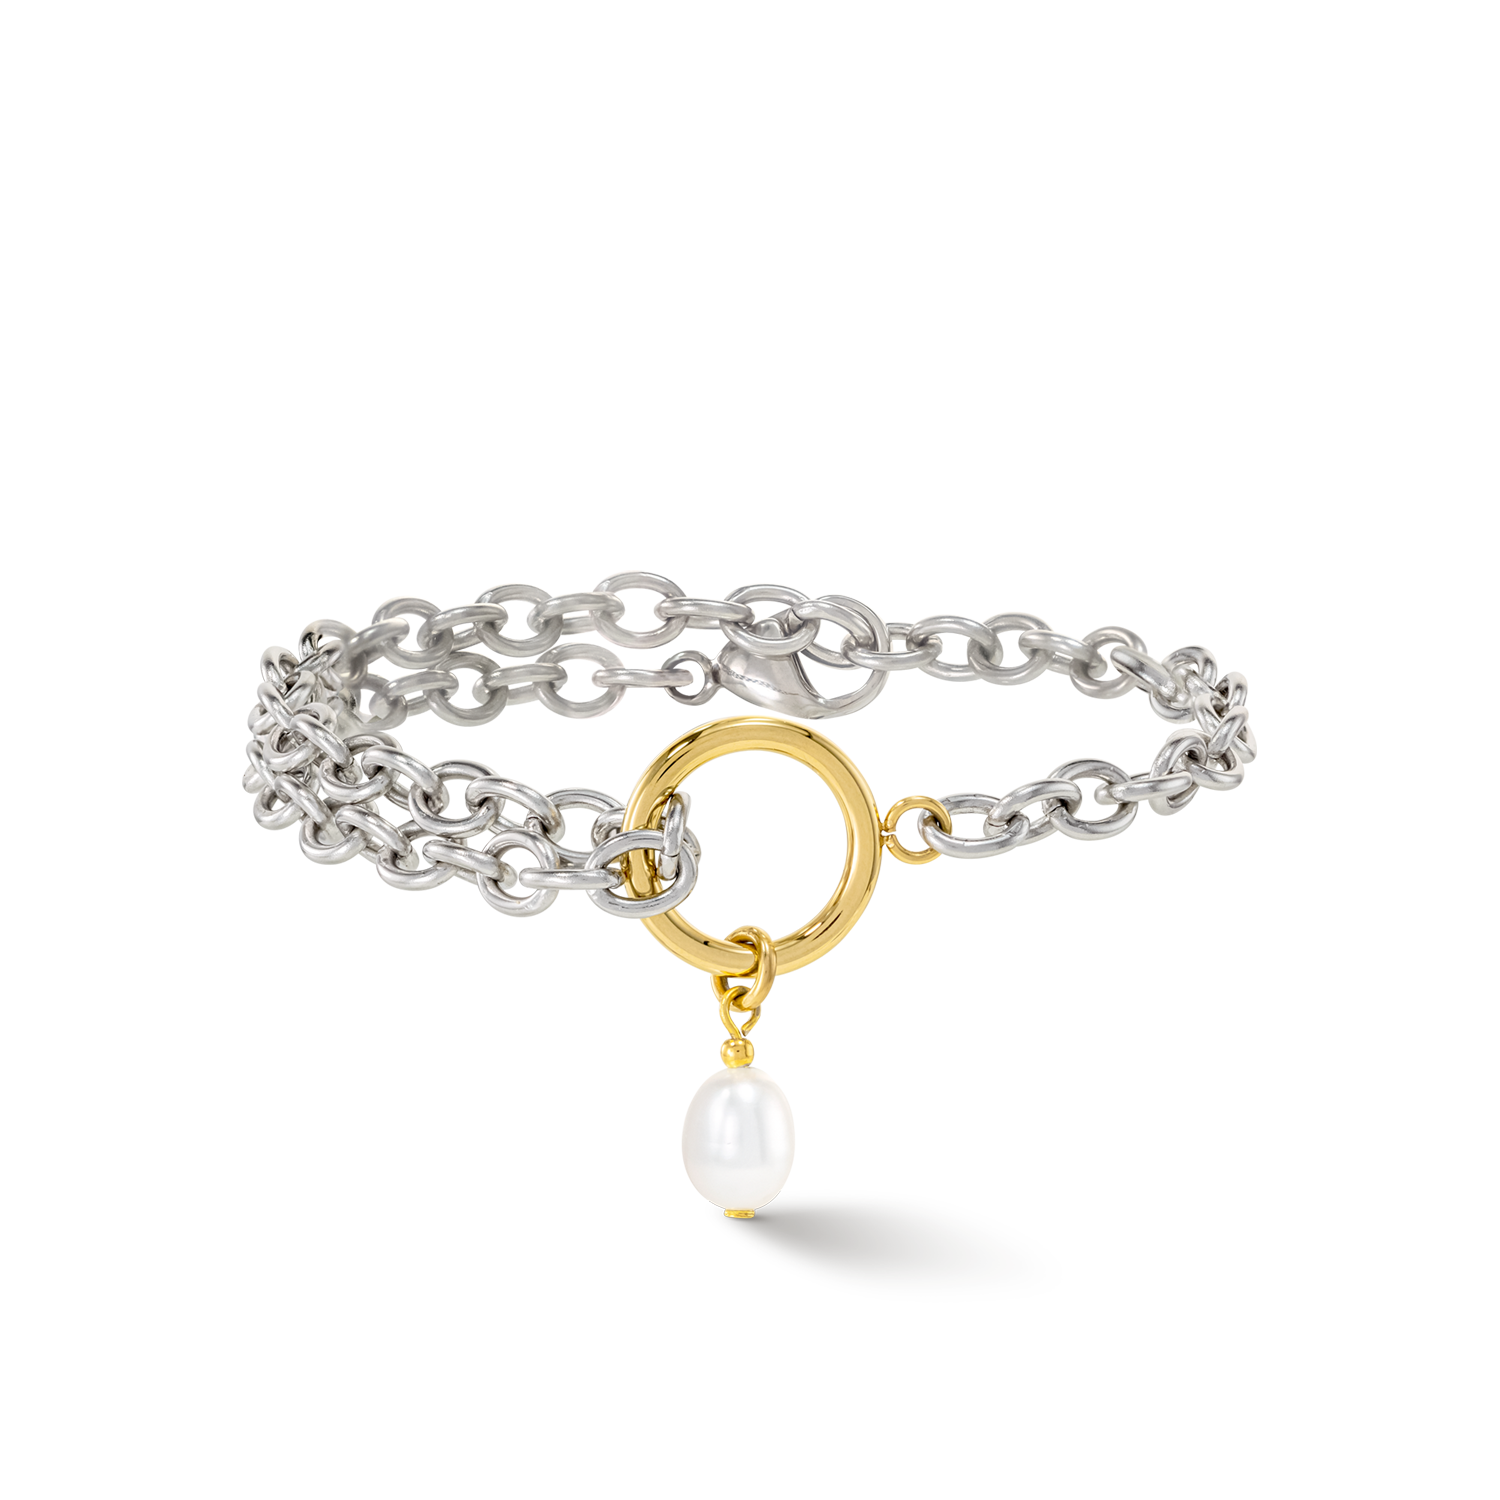 Armband Y & ovale Süßwasserperlen mit O-Ring bicolor